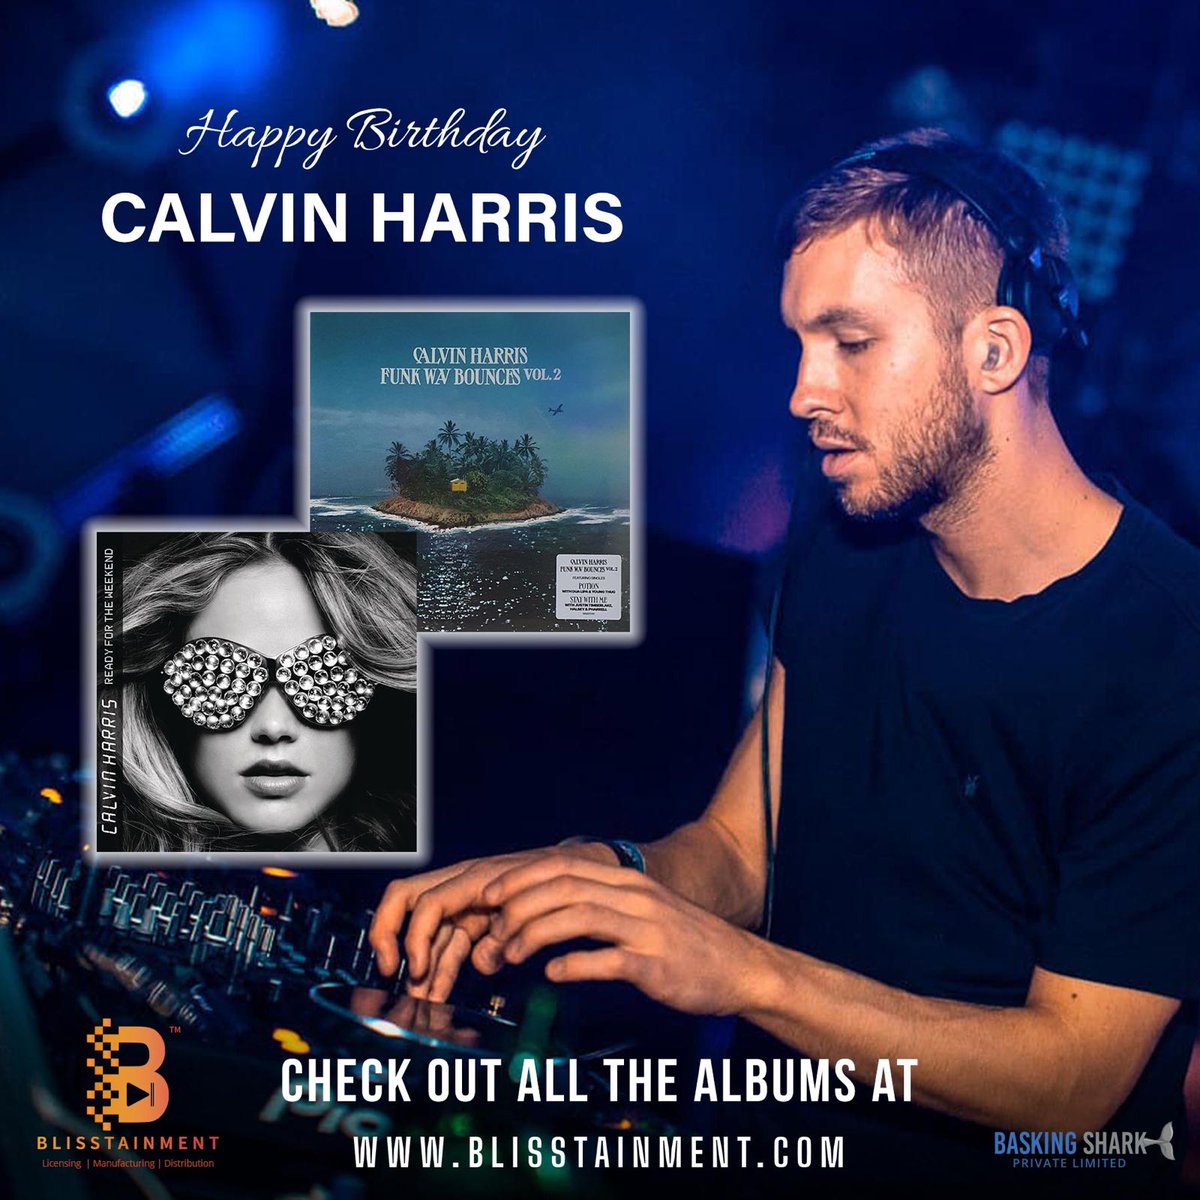 Wishing Calvin Harris a musical birthday! 🎉 Let the beats of his vinyl tracks set the tone for a fantastic celebration. 🎧

#CalvinHarrisBirthday #VinylVibes #BlisstainmentBeats #MusicMagic #VinylCelebration #HappyBirthdayCalvin #AudioBliss #TurntableTunes #GroovyBirthday